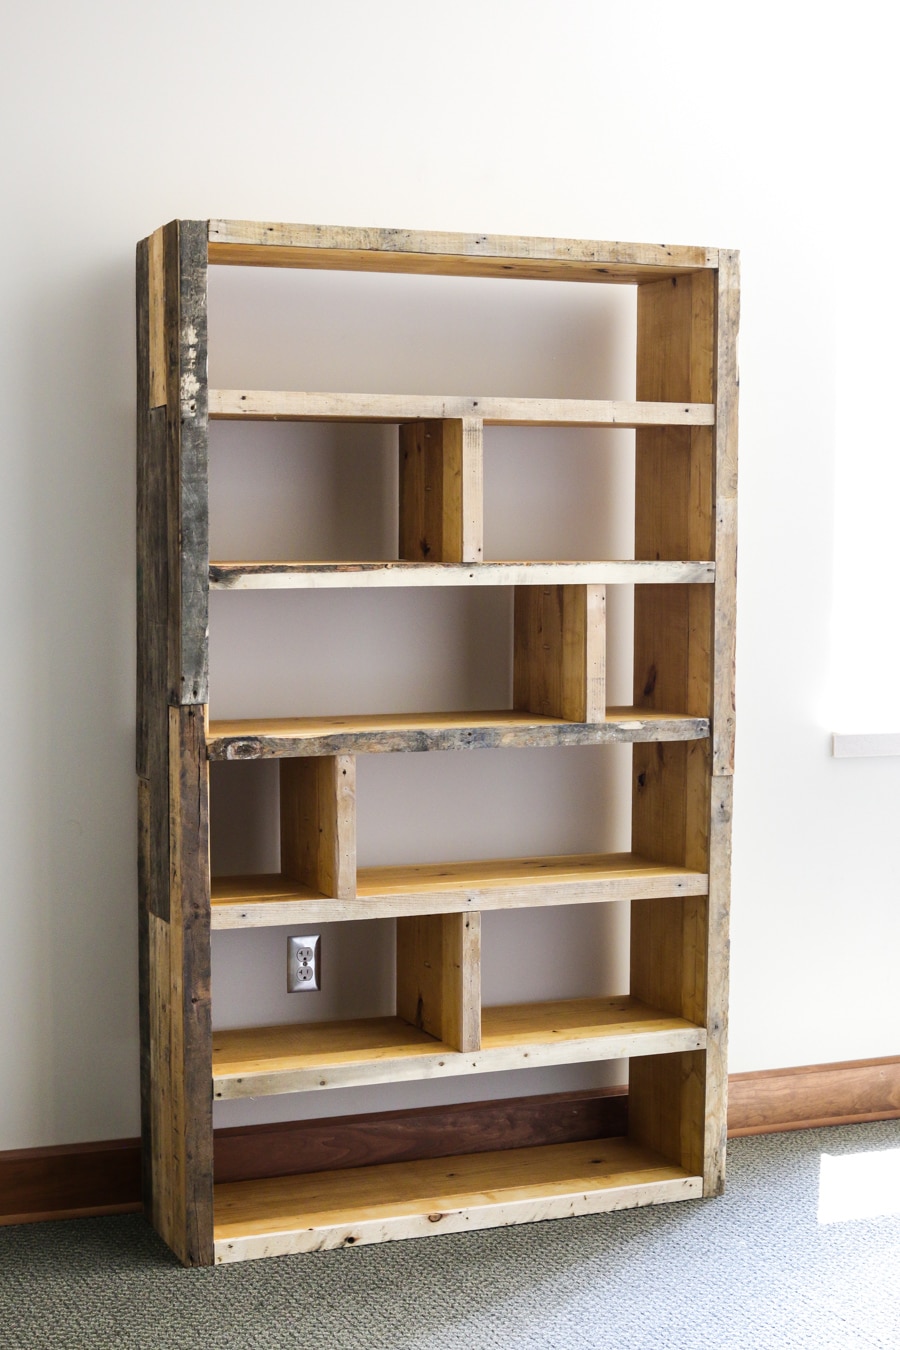 How to build a DIY pallet bookshelf